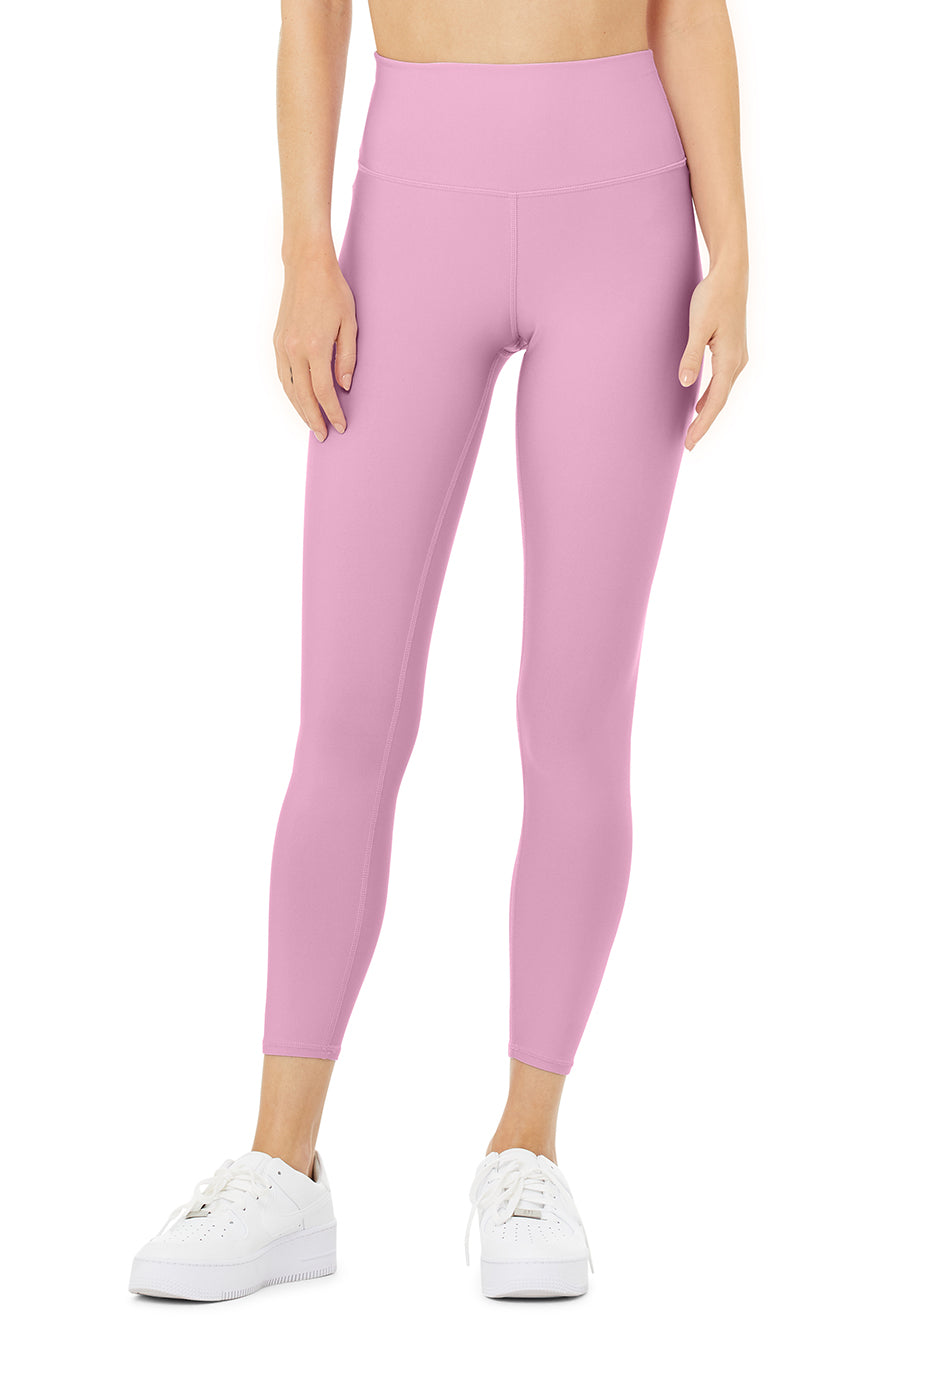 ALO Yoga, Pants & Jumpsuits, Alo Yoga Airbrush Legging Mink Gradient  Purple Blush Pink Ombre Tights Womens M